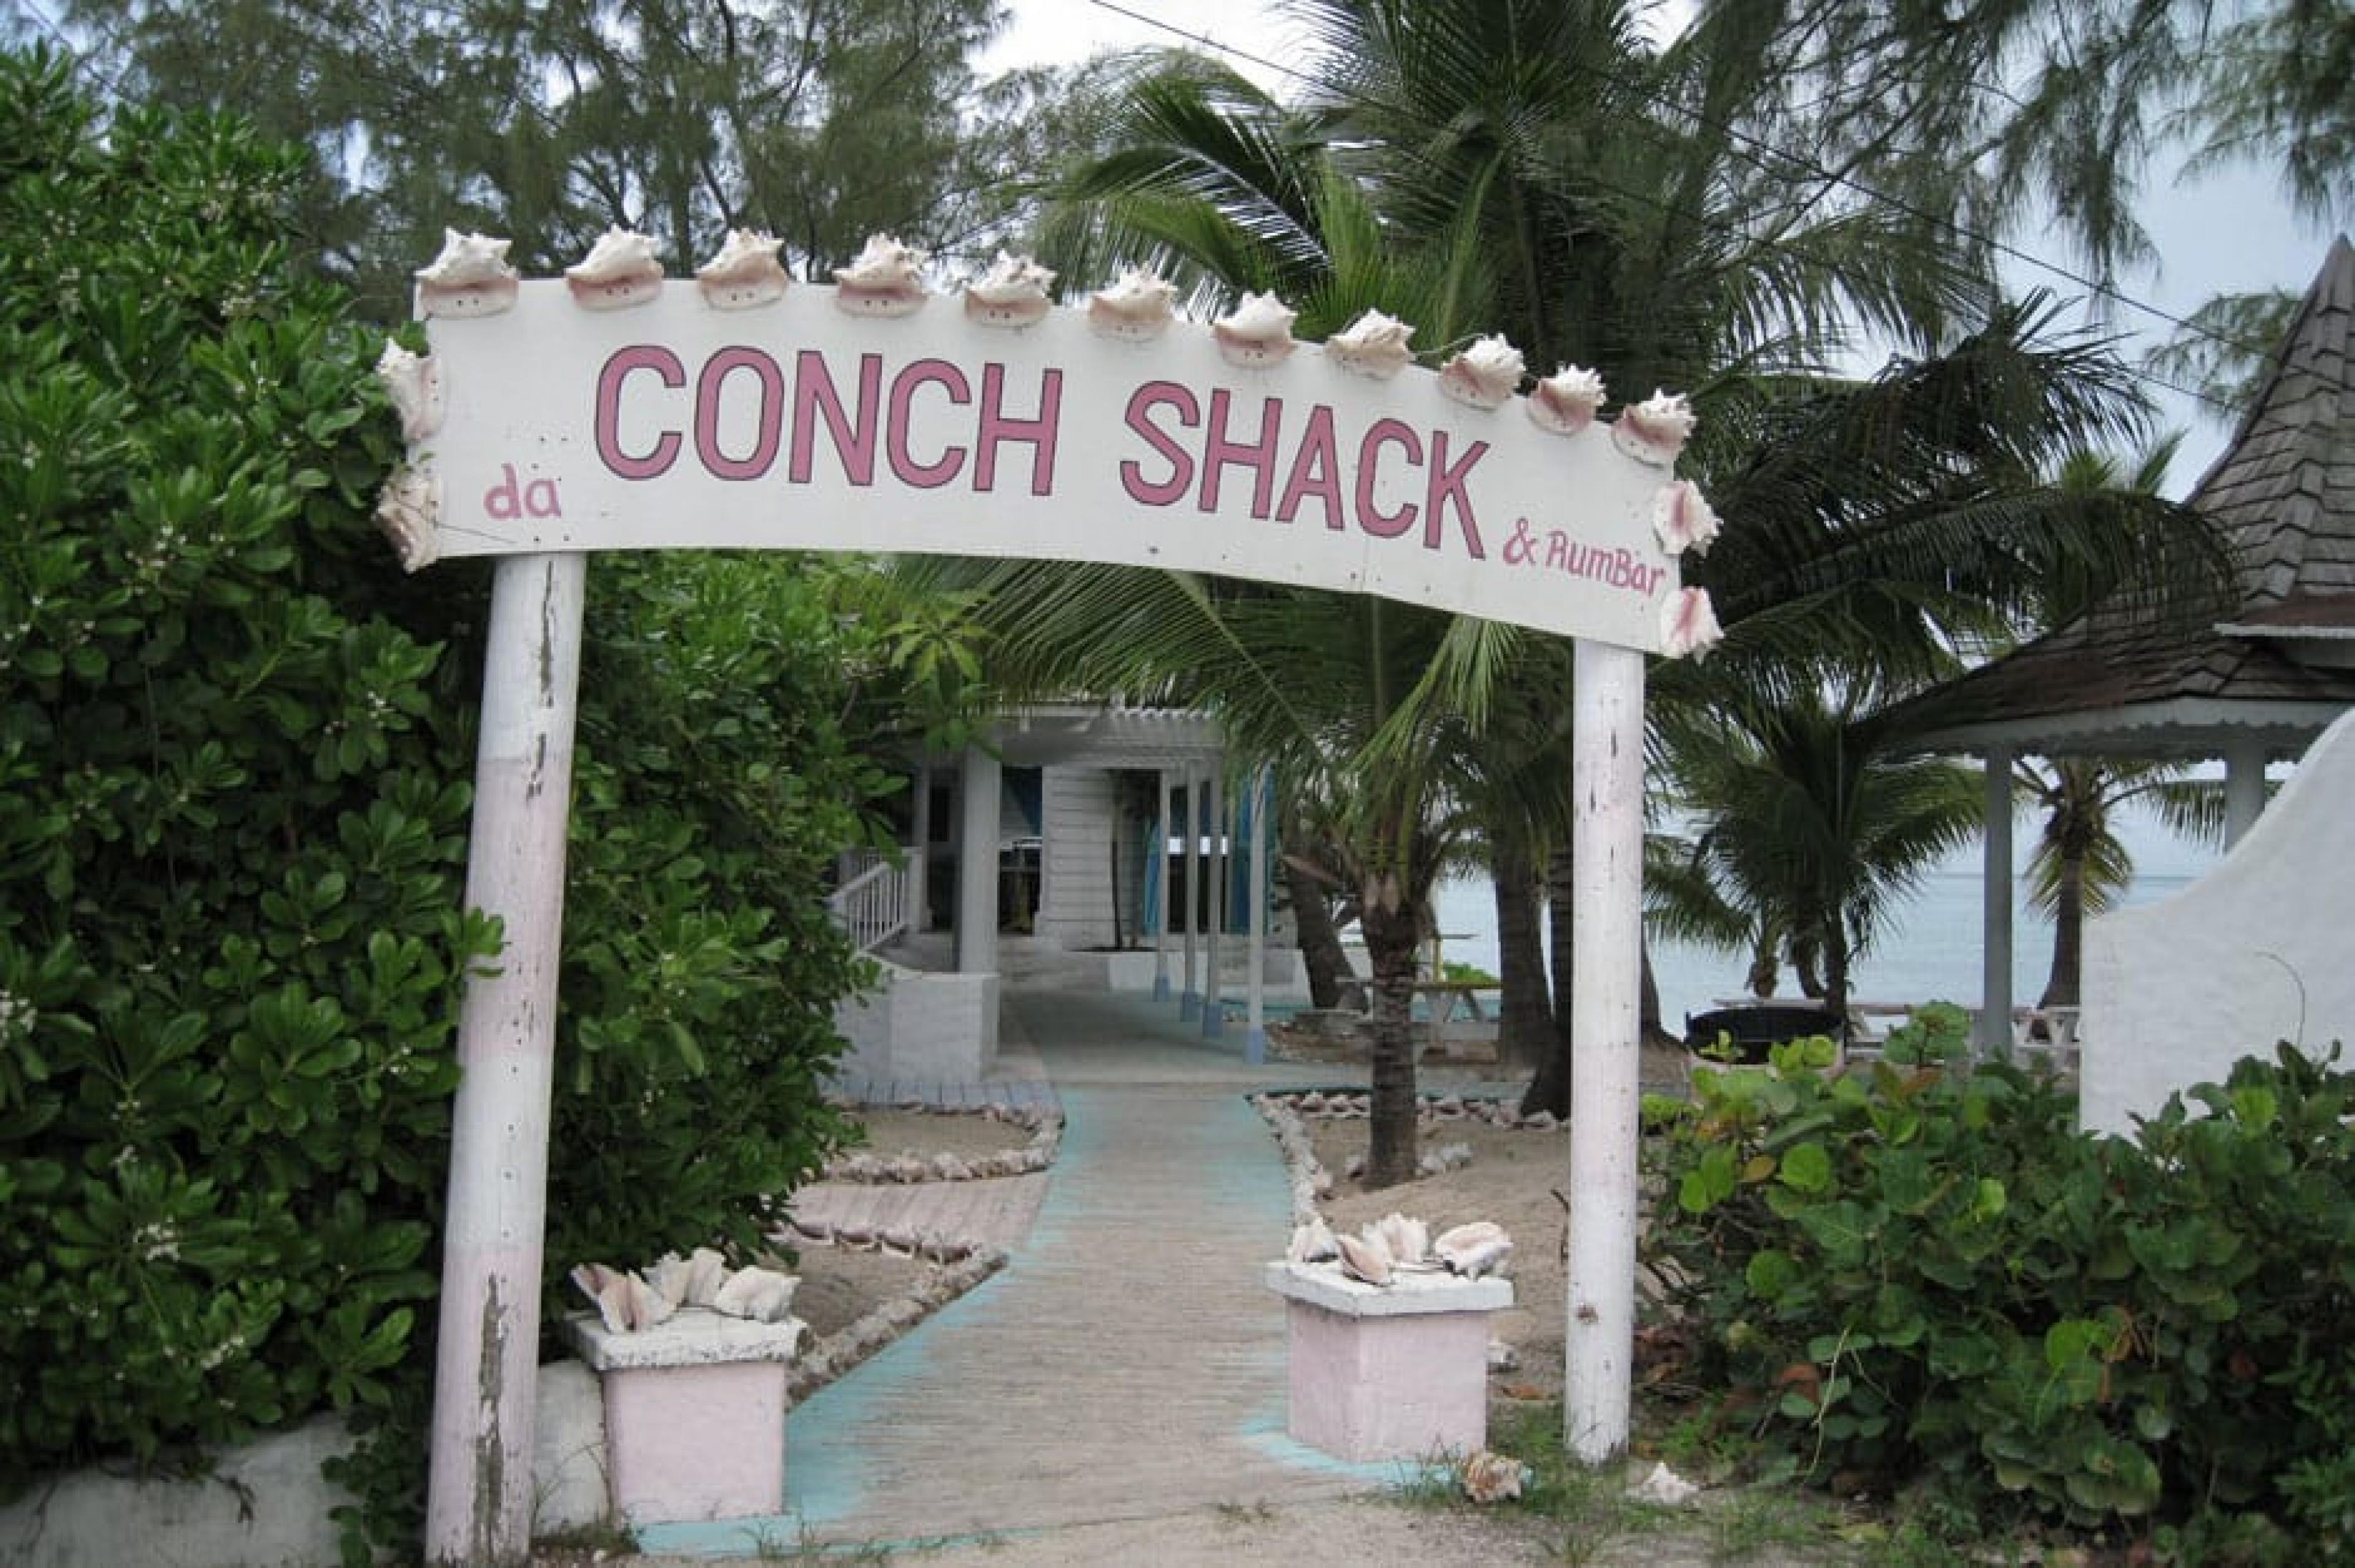 Entrance at Da Conch Shack, Turks & Caicos, Caribbean